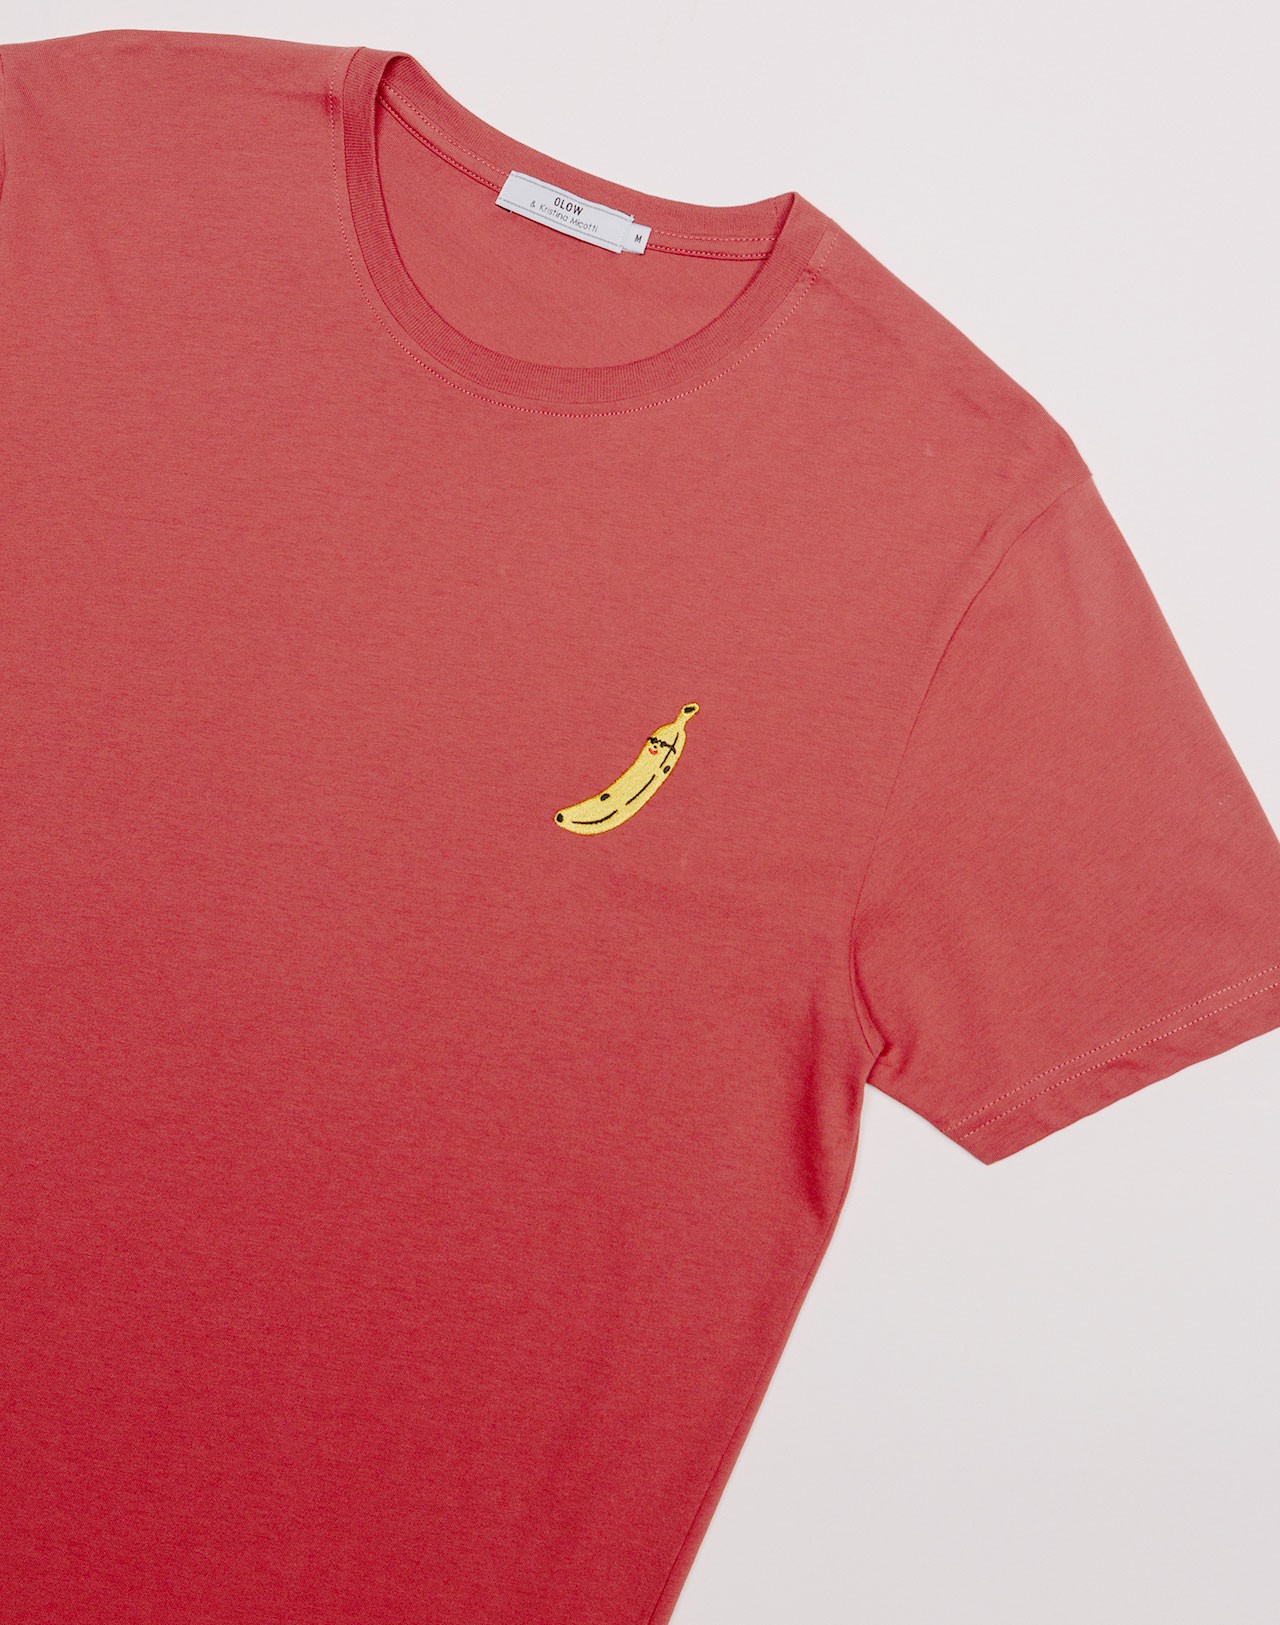 Banana Chill t-shirt